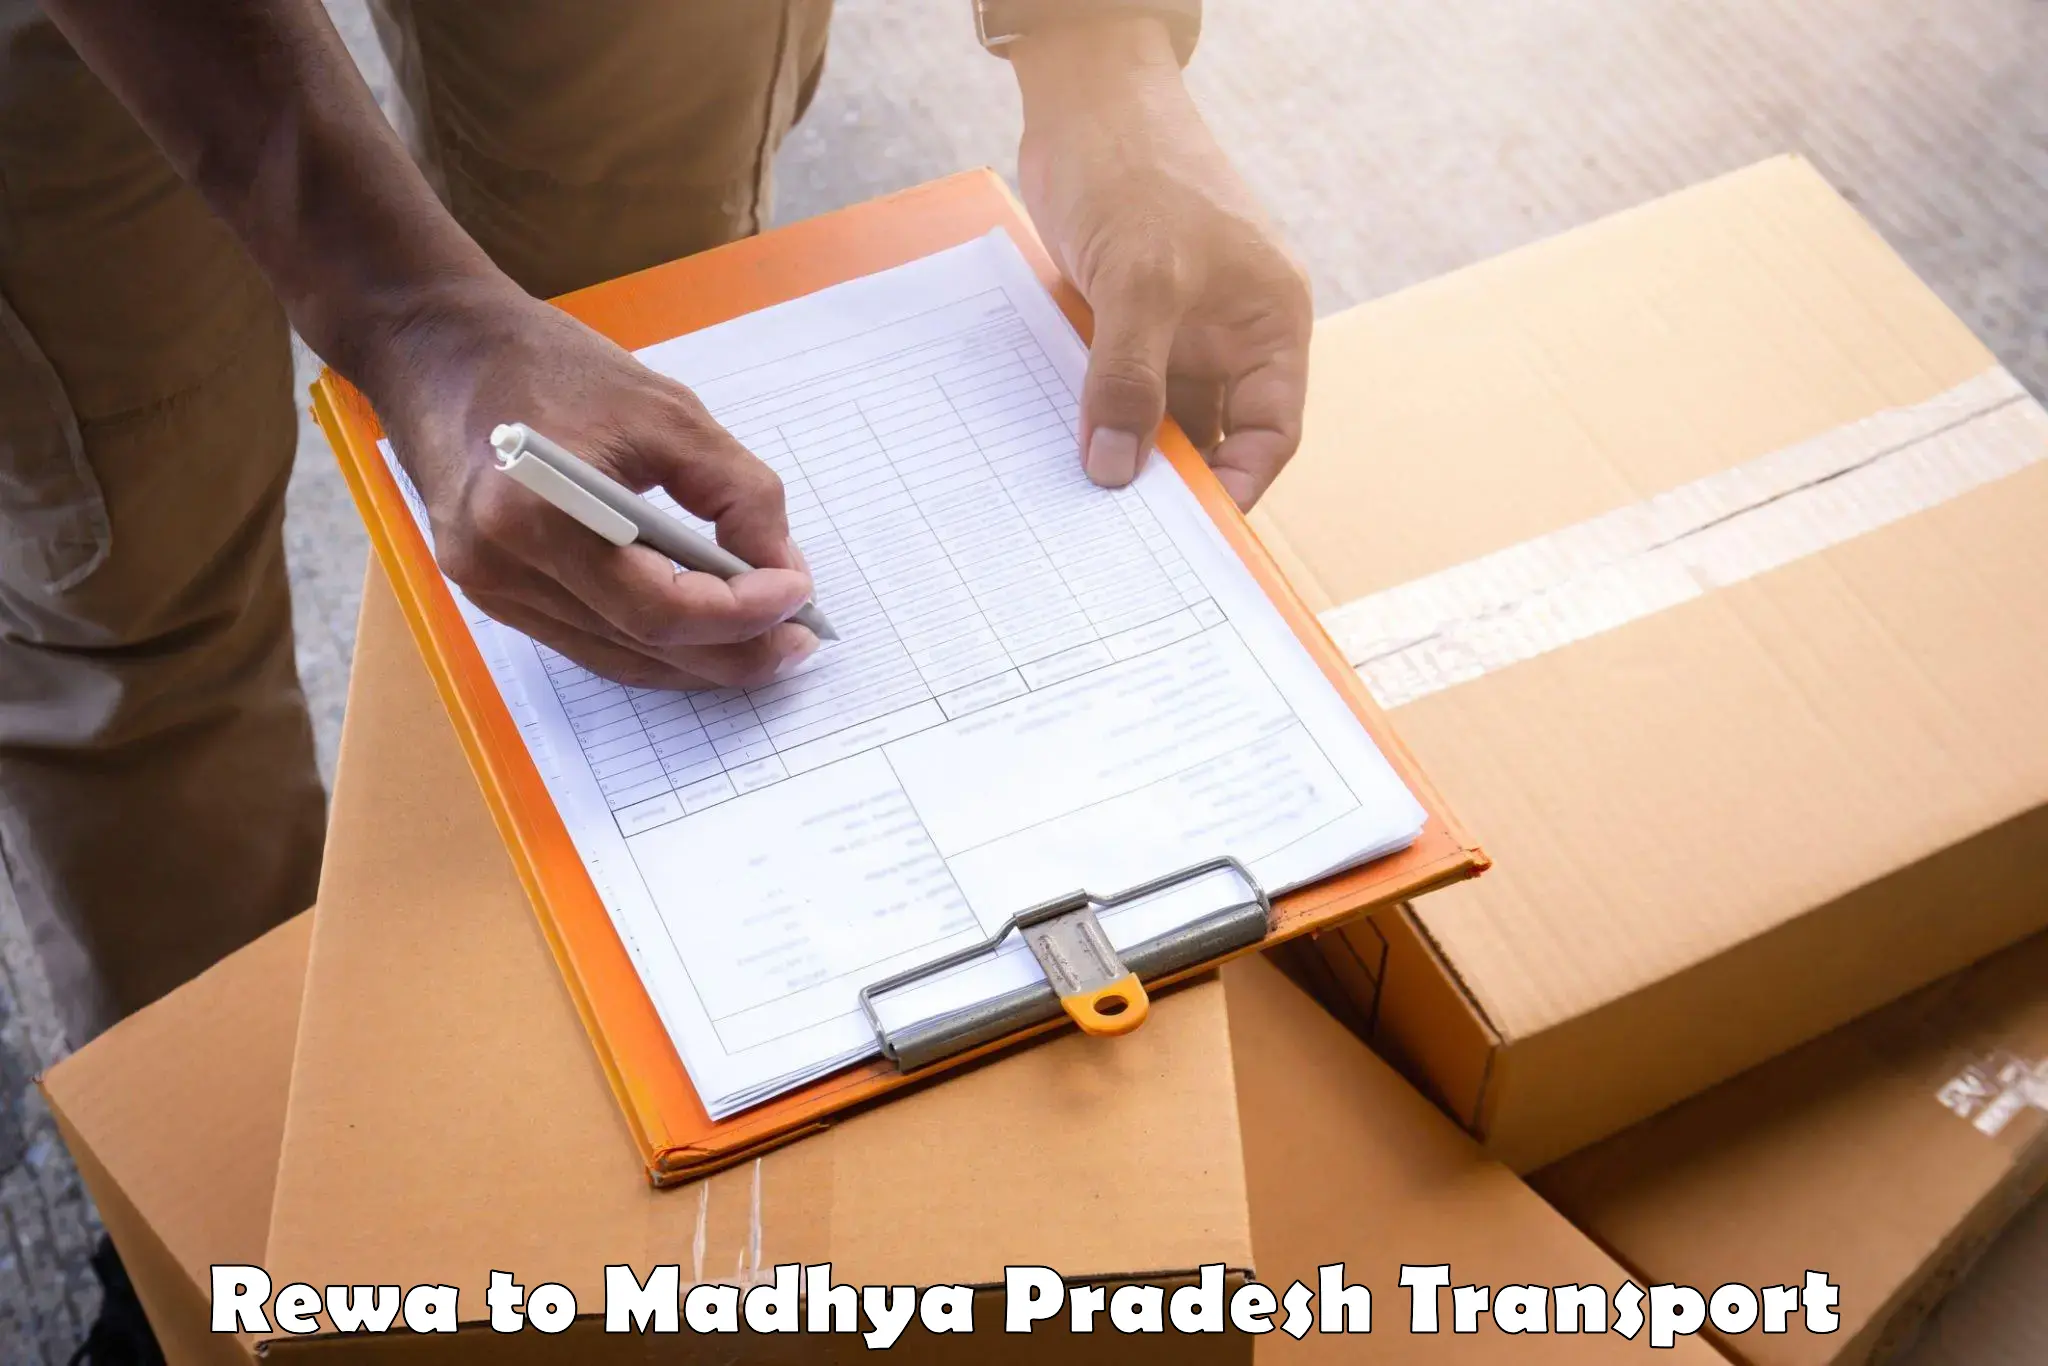 Truck transport companies in India in Rewa to Ujjain